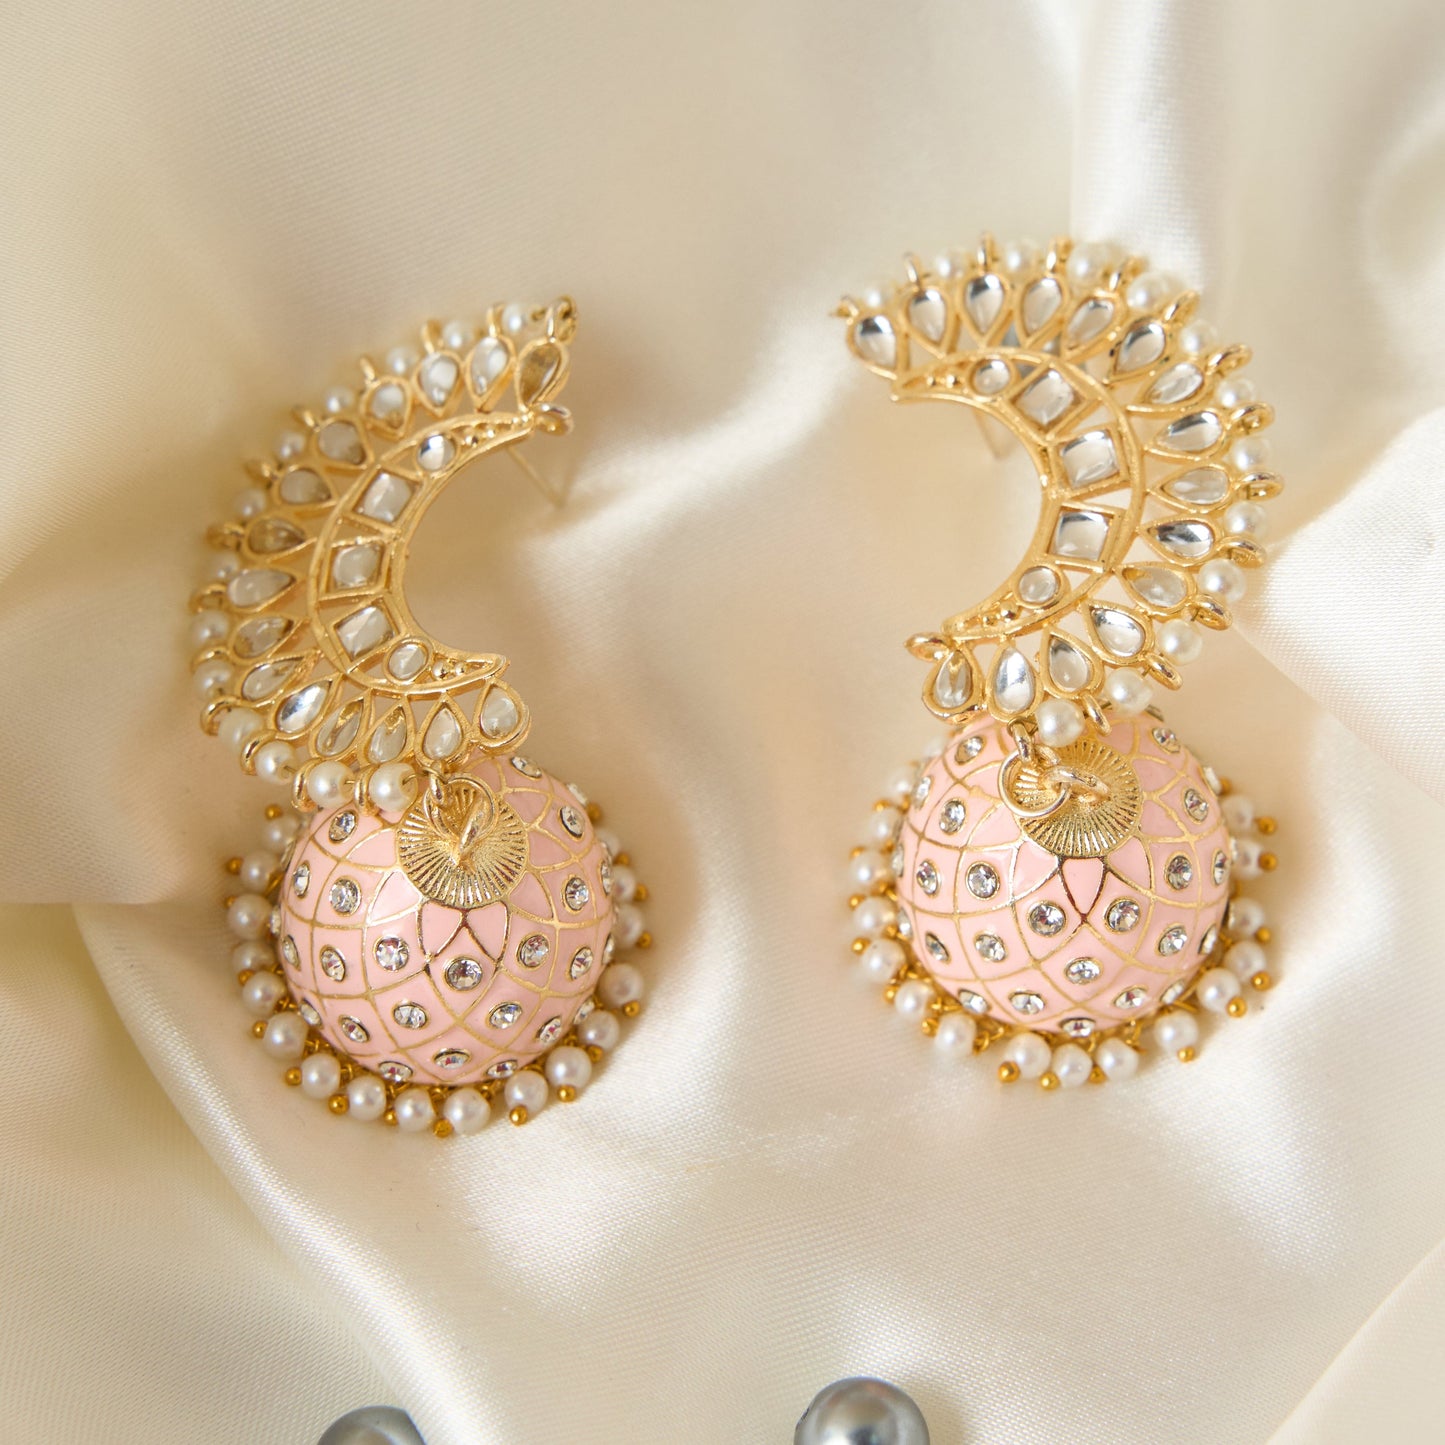 Moonstruck Traditional Inidian Golden Meenakari Jhumka/Jhumki Earrings With Pearls for Women (Peach) - www.MoonstruckINC.com